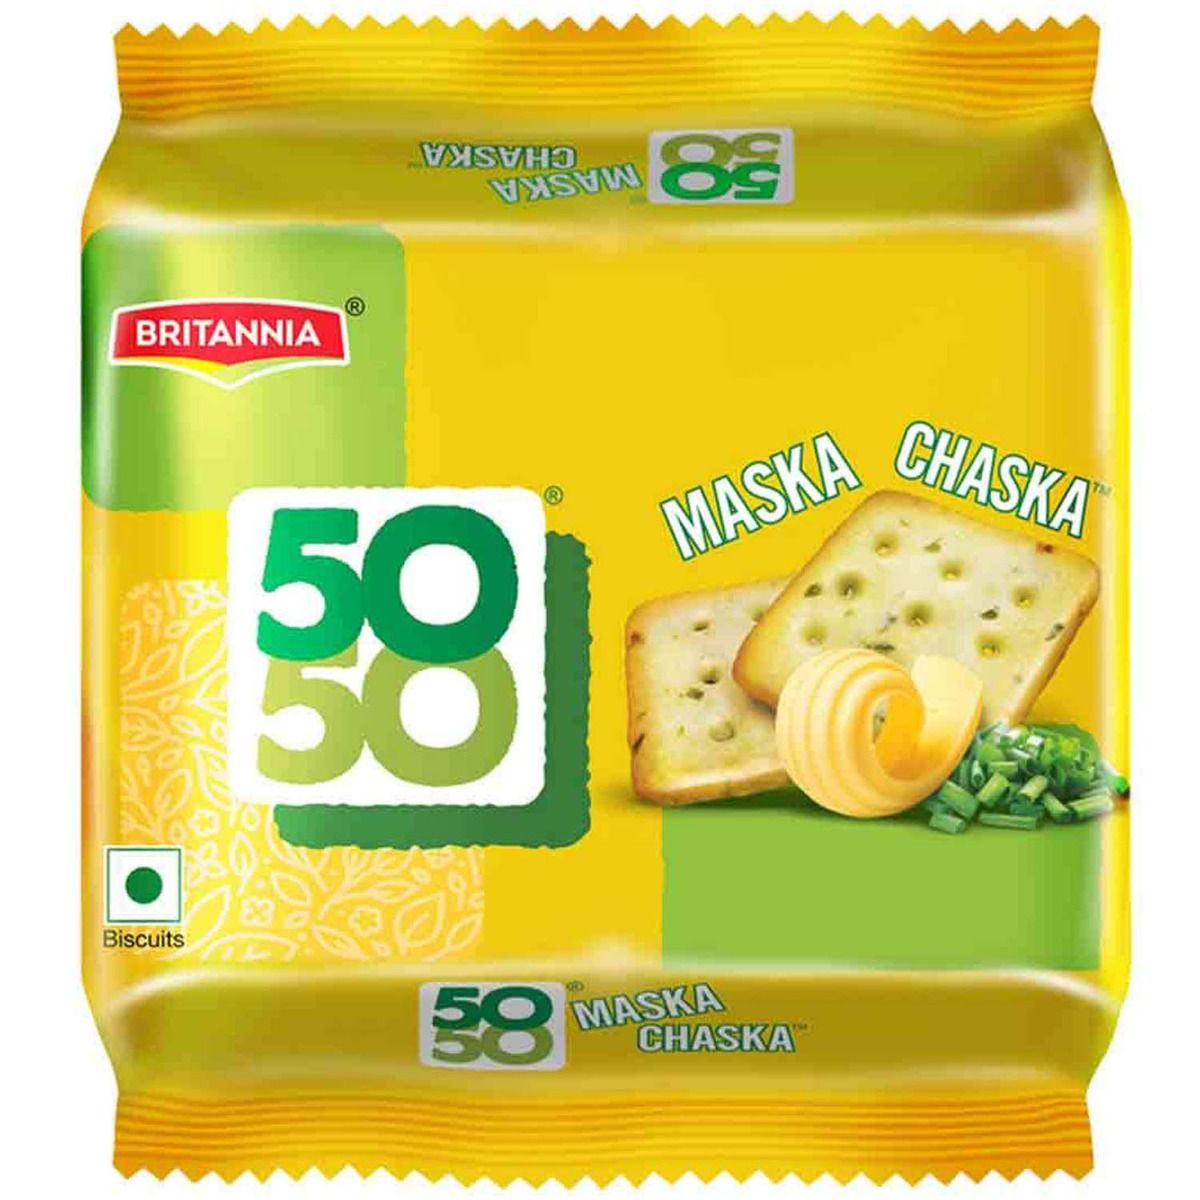 Buy Britannia 50-50 Maska Chaska Biscuits, 120 gm Online